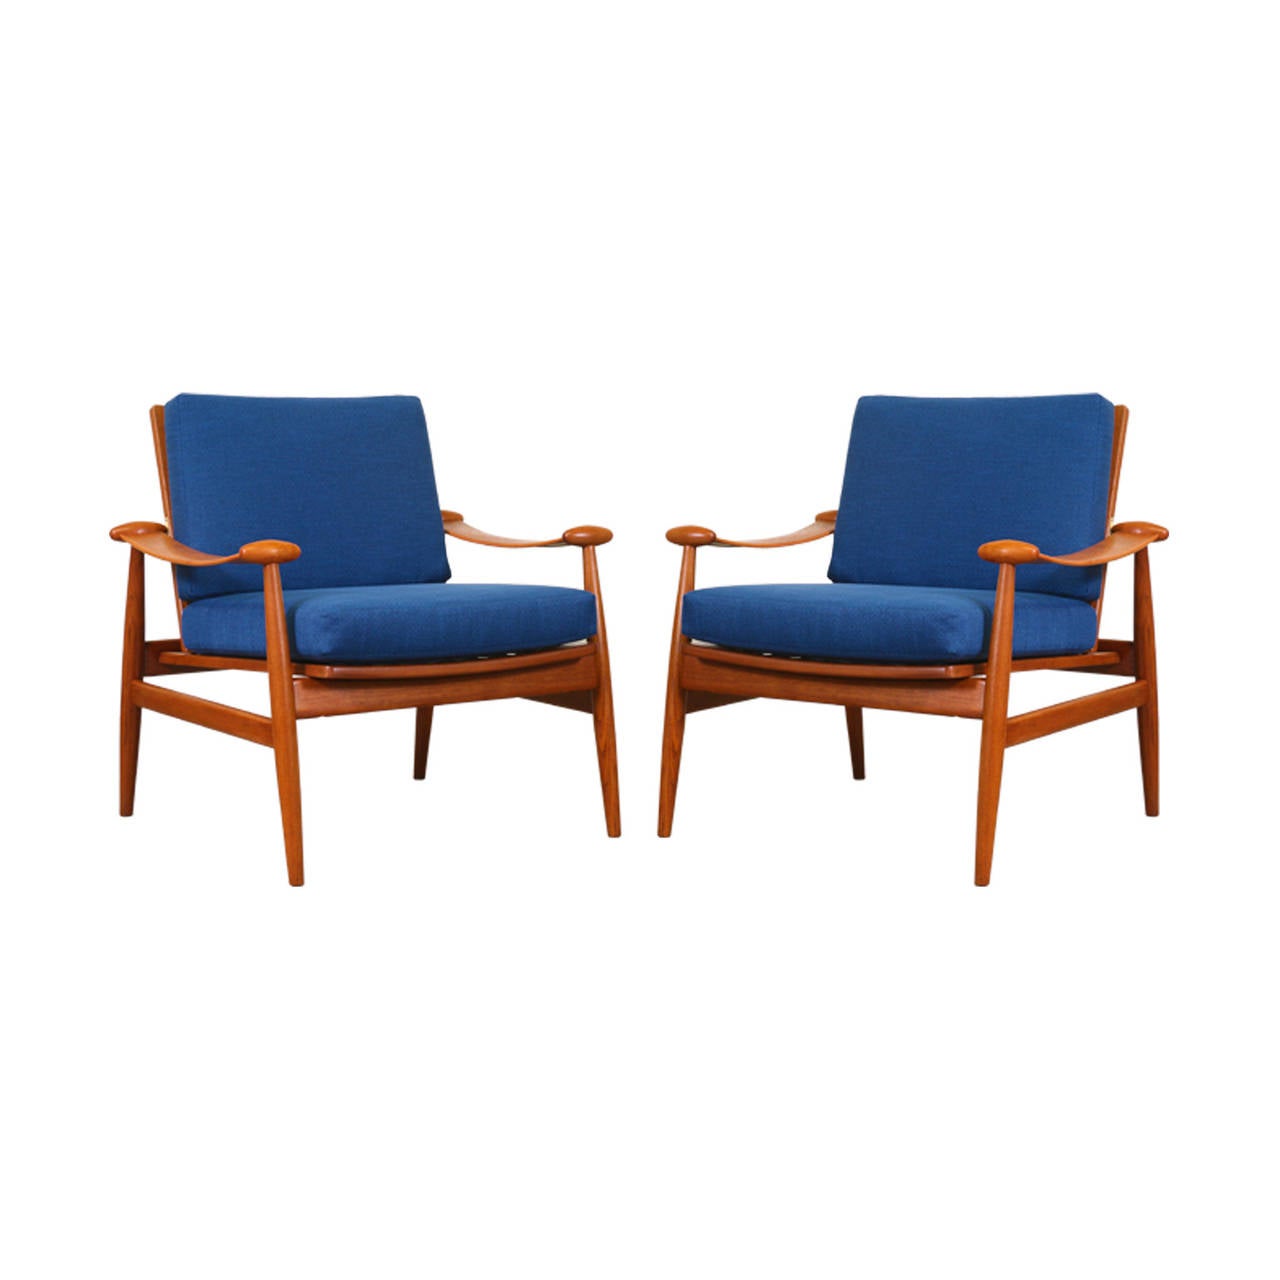 Danish Finn Juhl Model #133 “Spade” Teak Lounge Chairs for France & Son